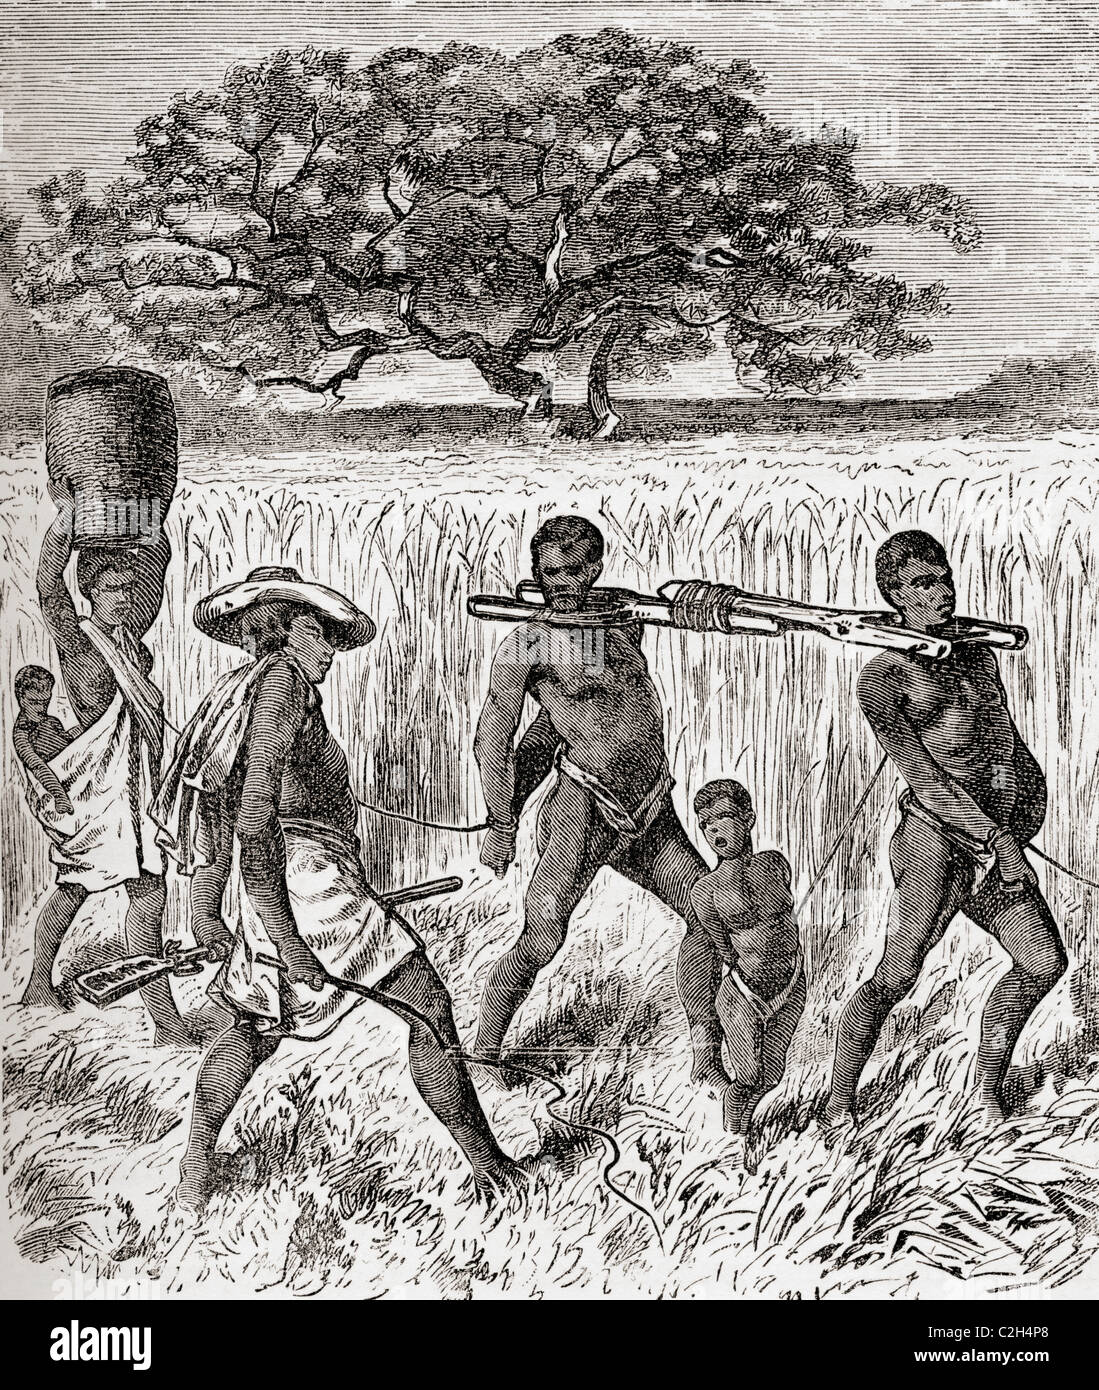 Sklave im 19. Jahrhundert in Afrika fahren. Stockfoto